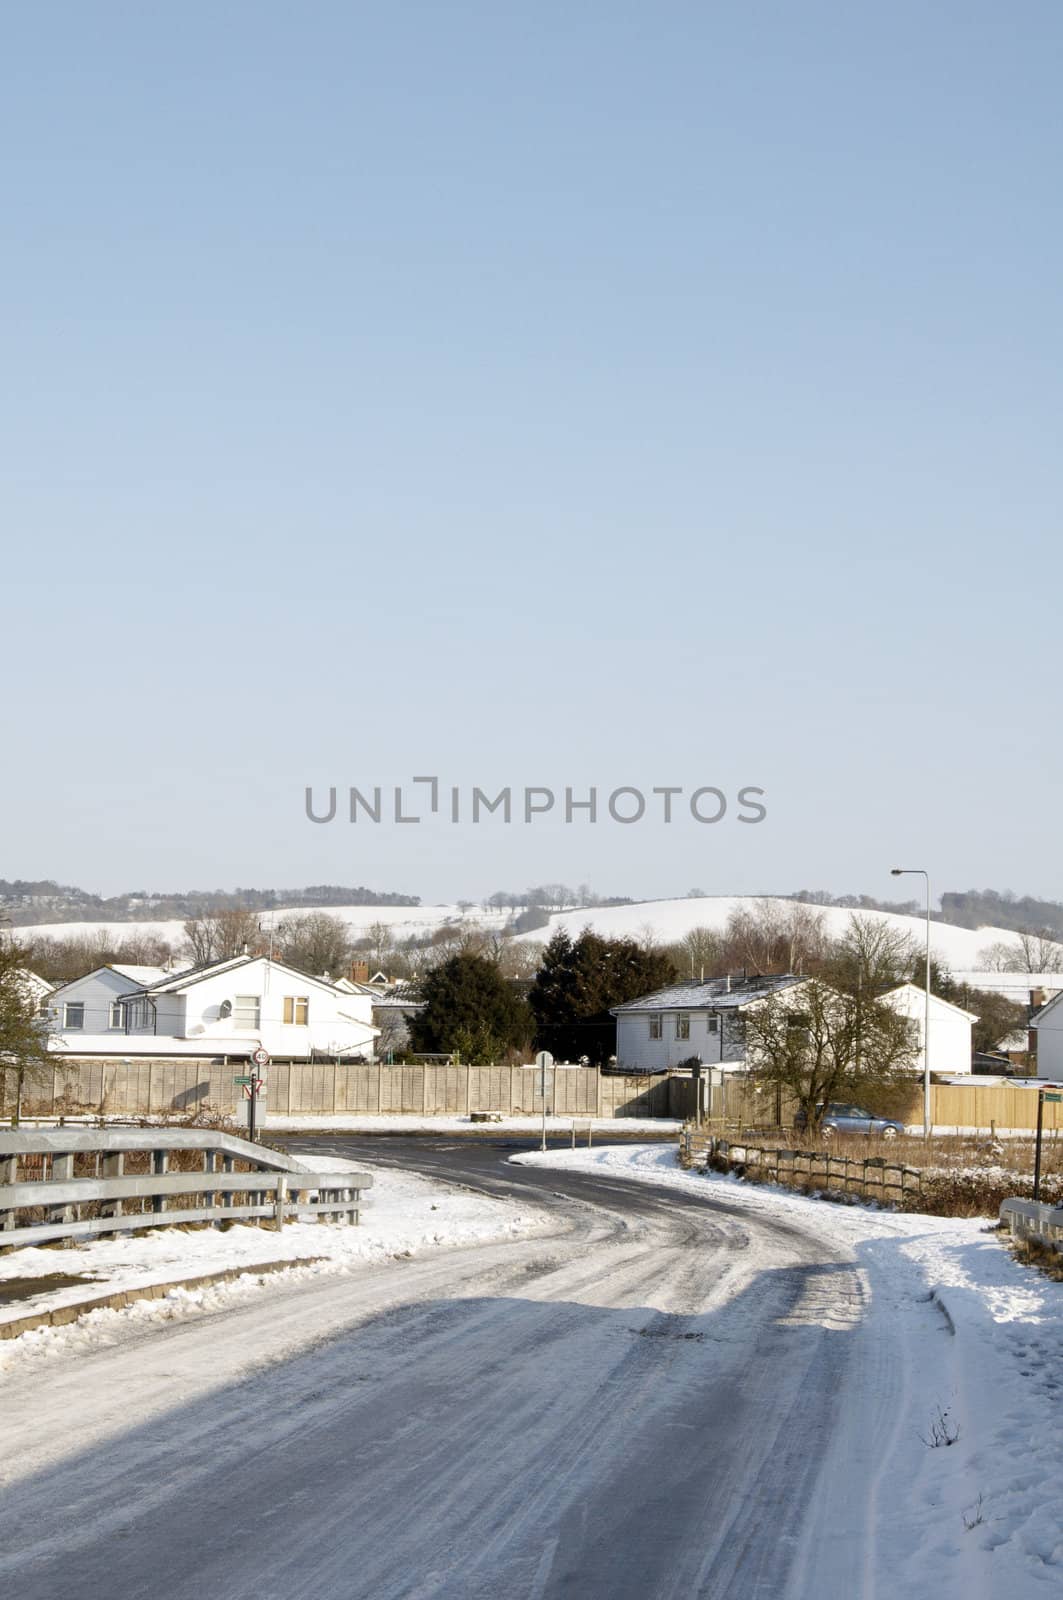 Winter lane by mbtaichi